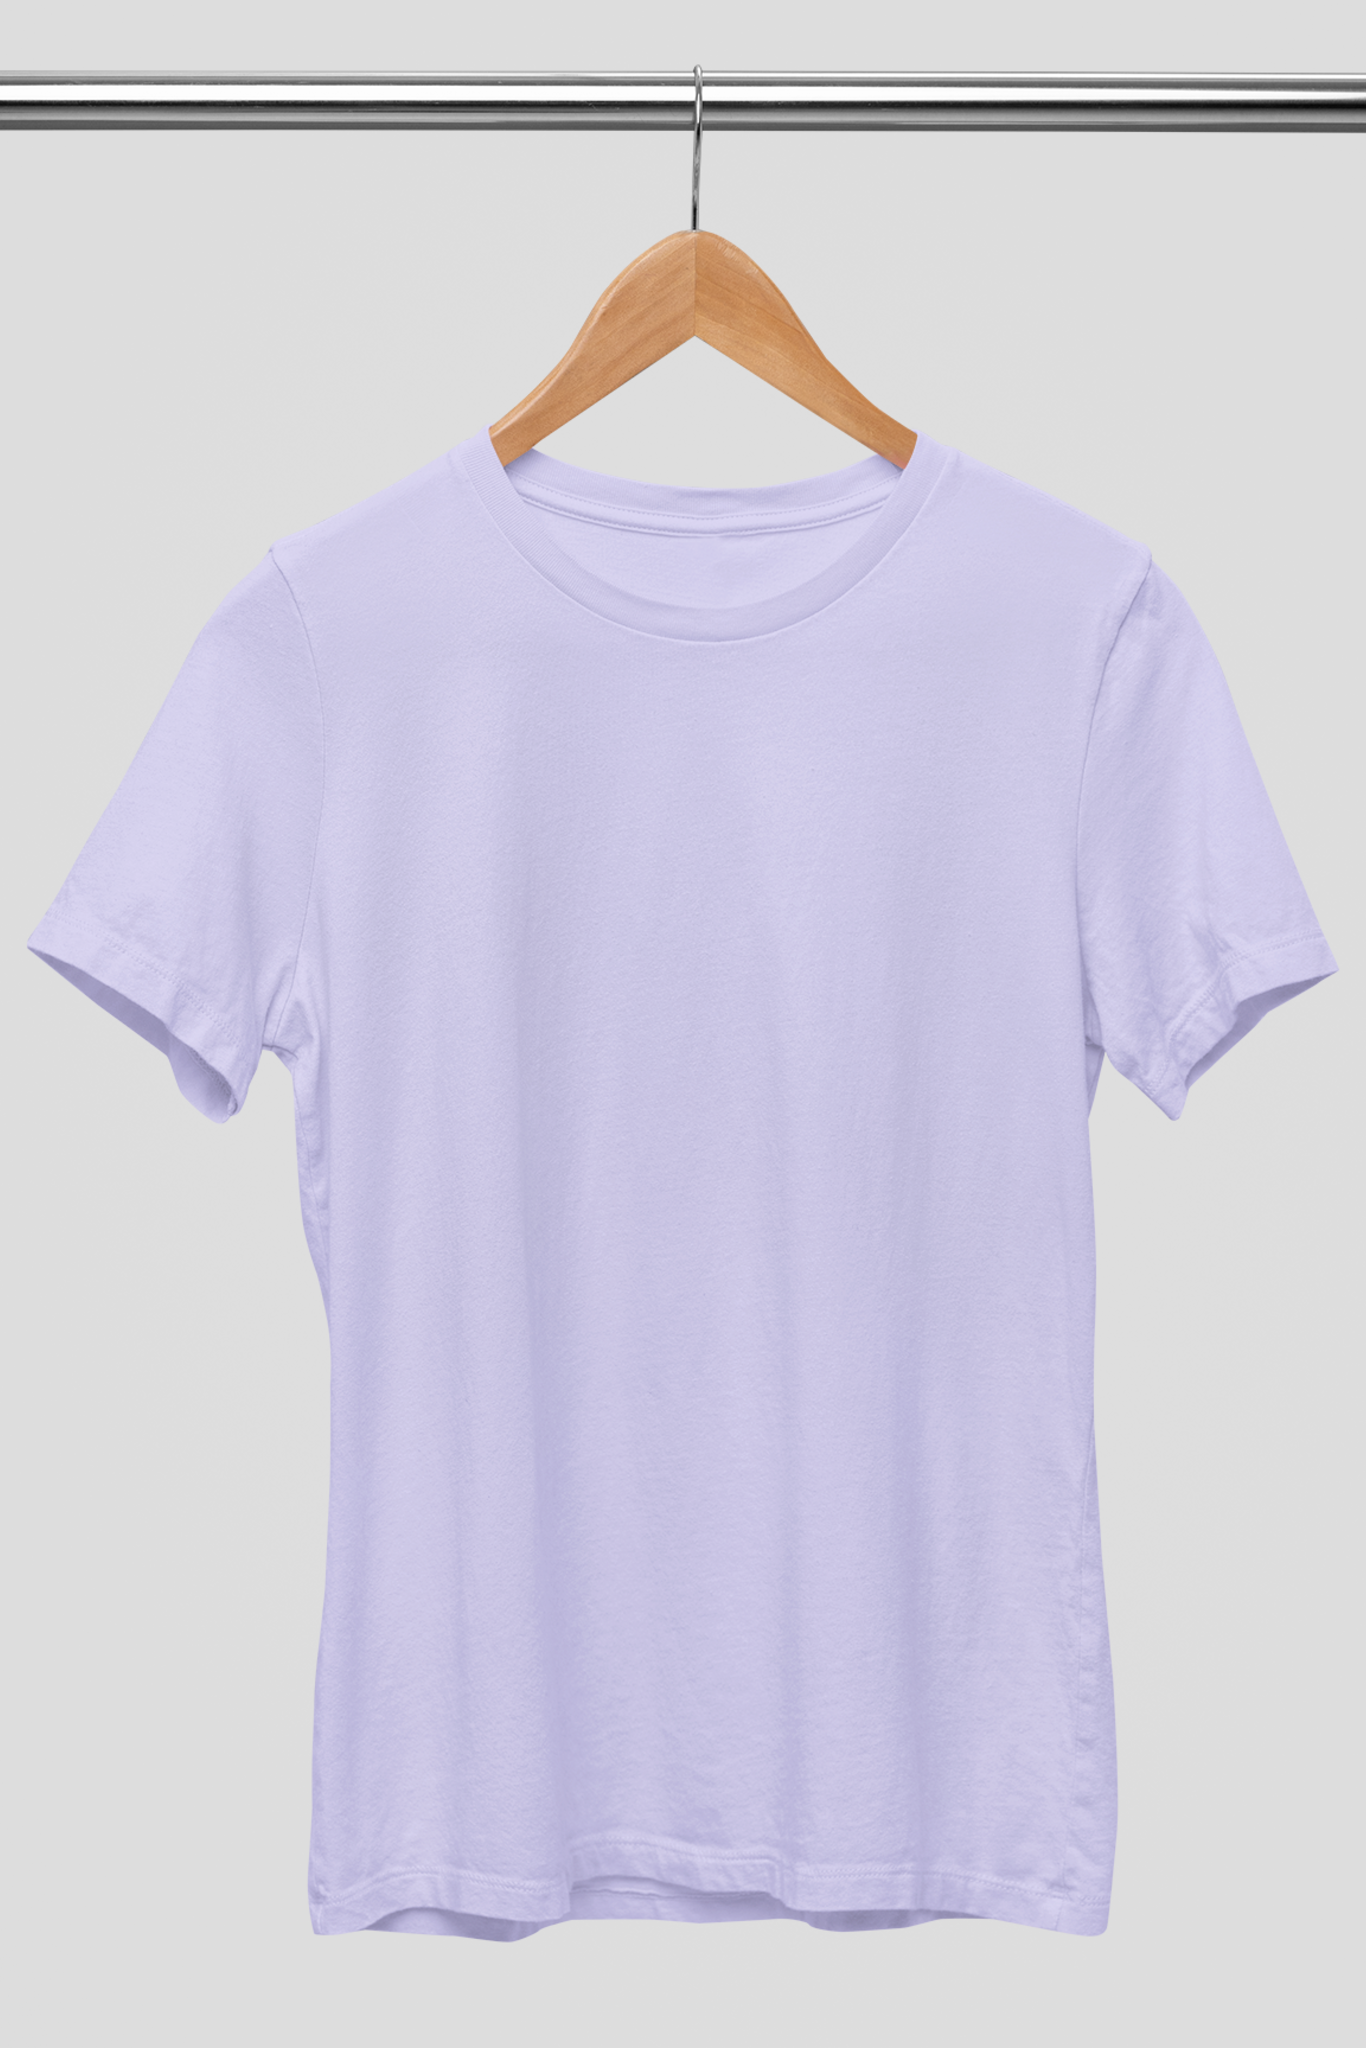 Men's Round Neck: Lavender T-Shirt - Ayuda Homes